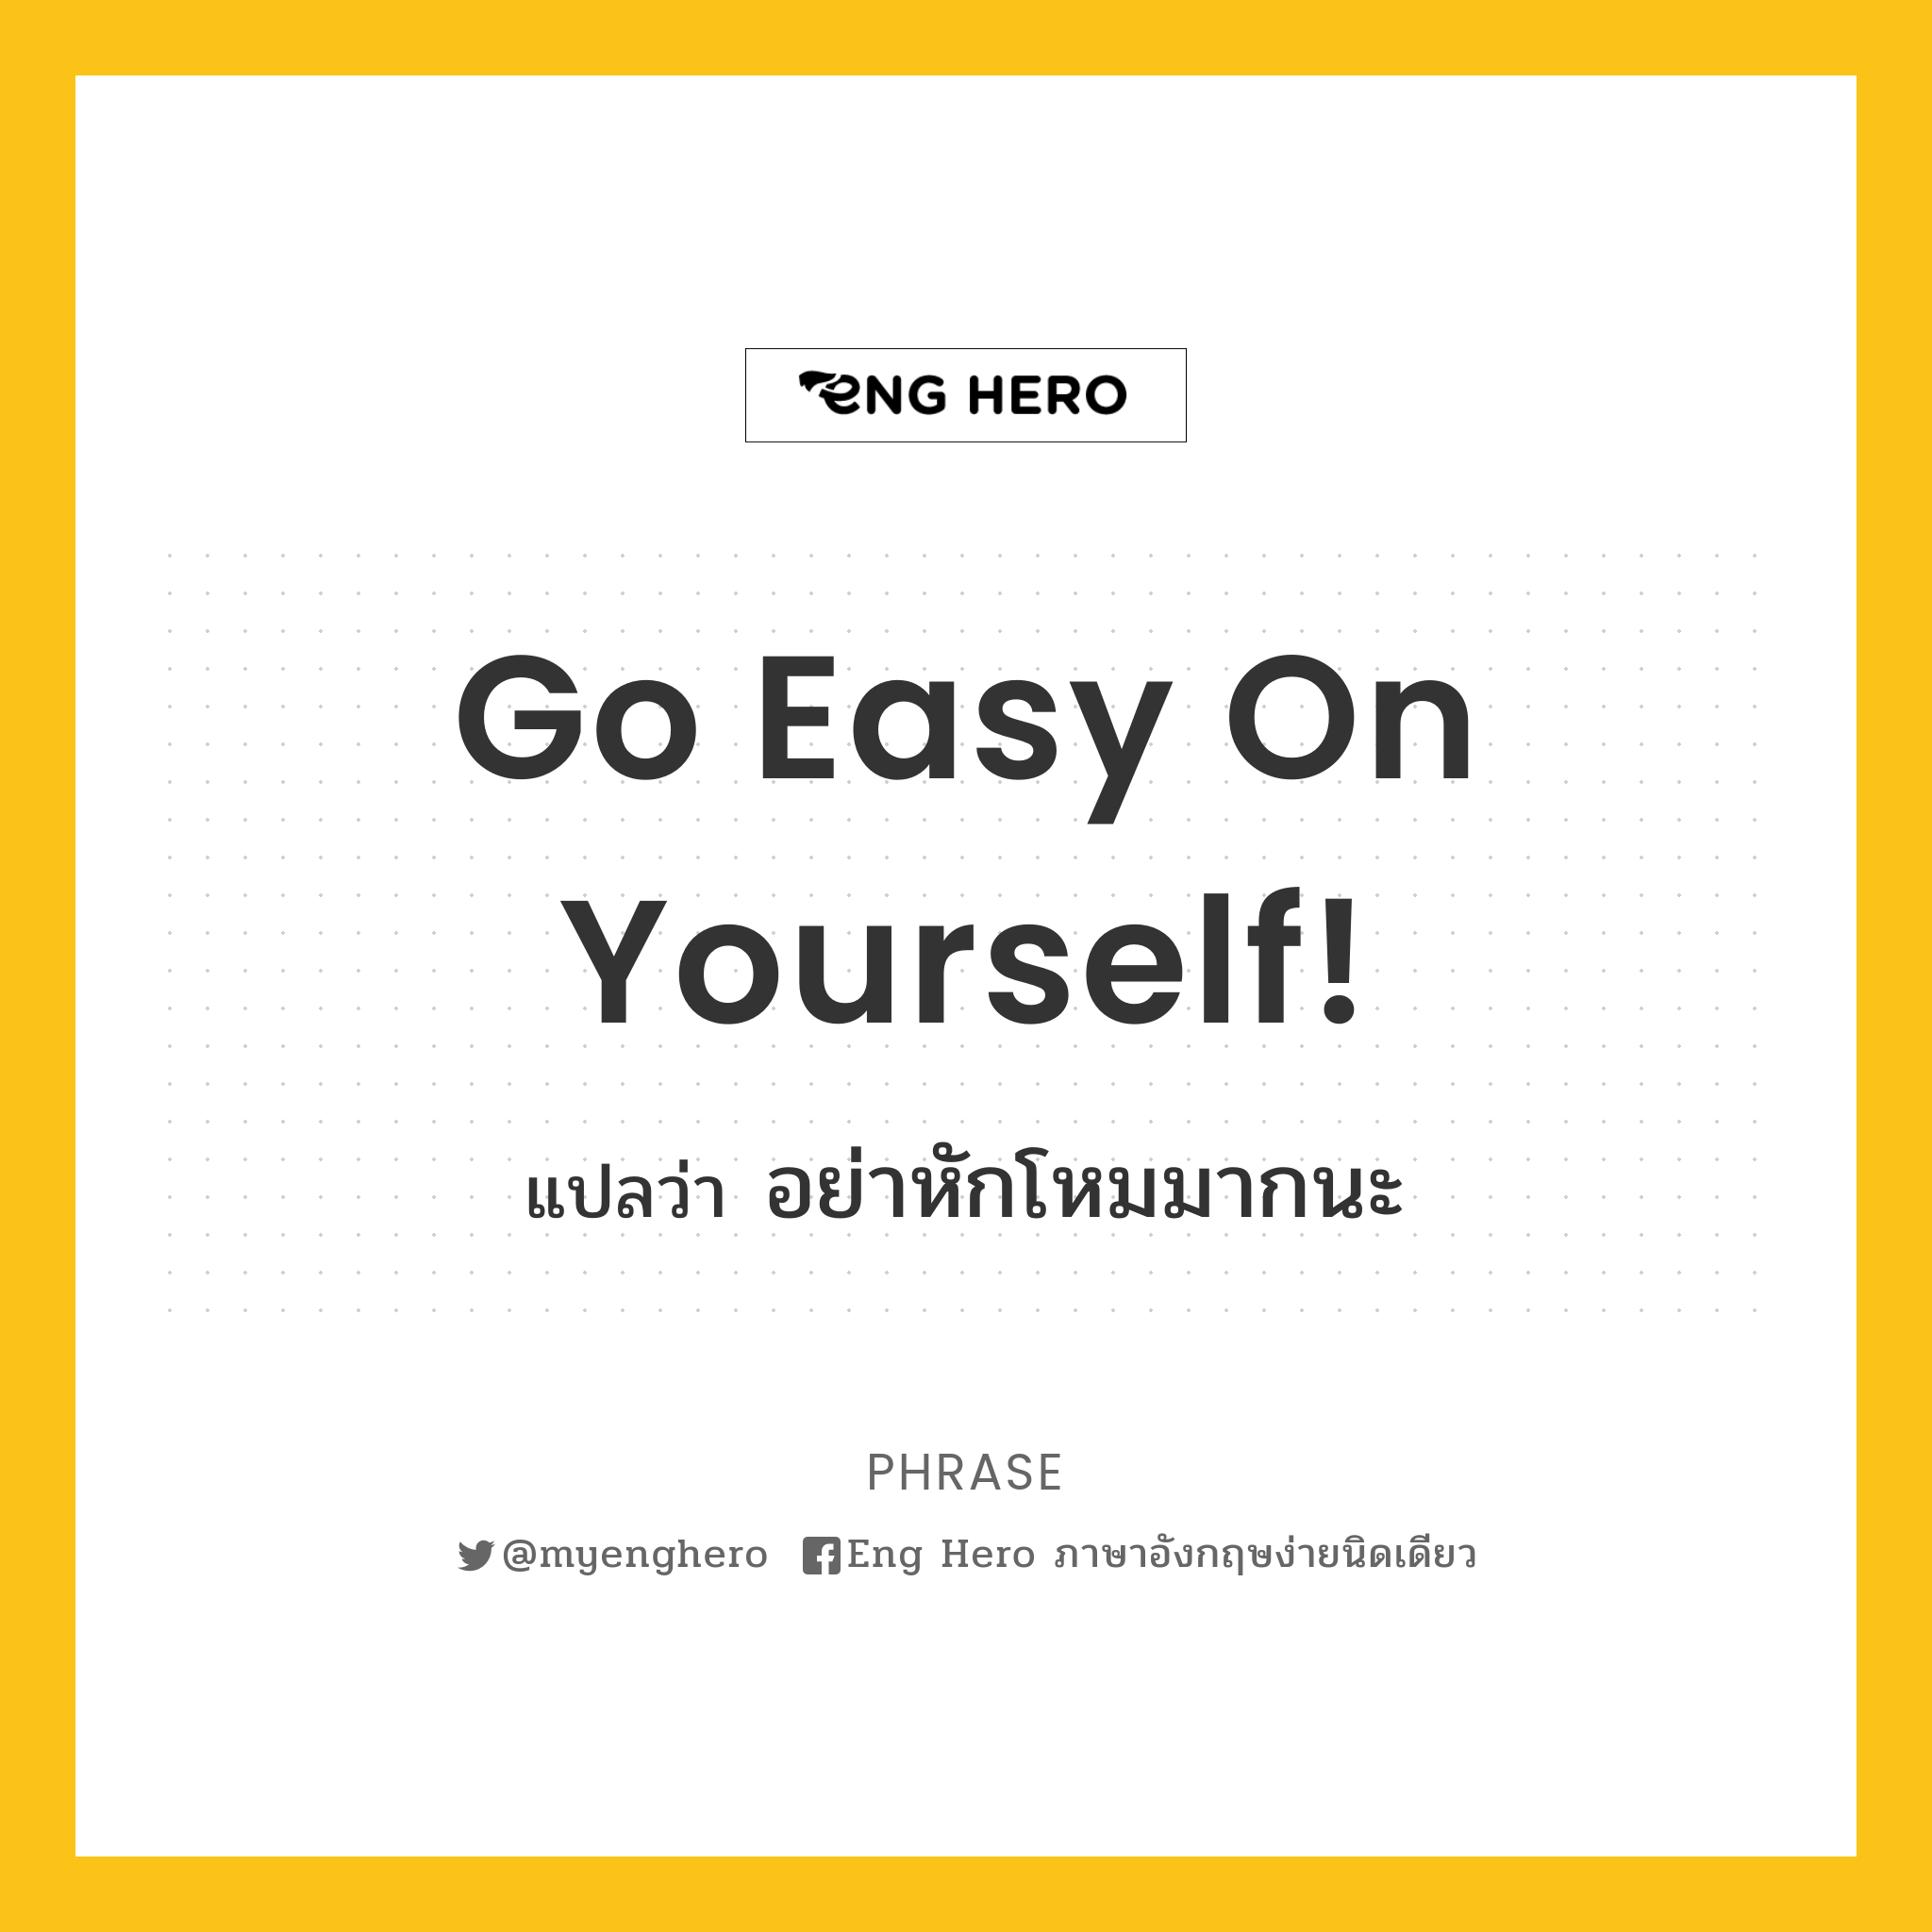 Go easy on yourself!